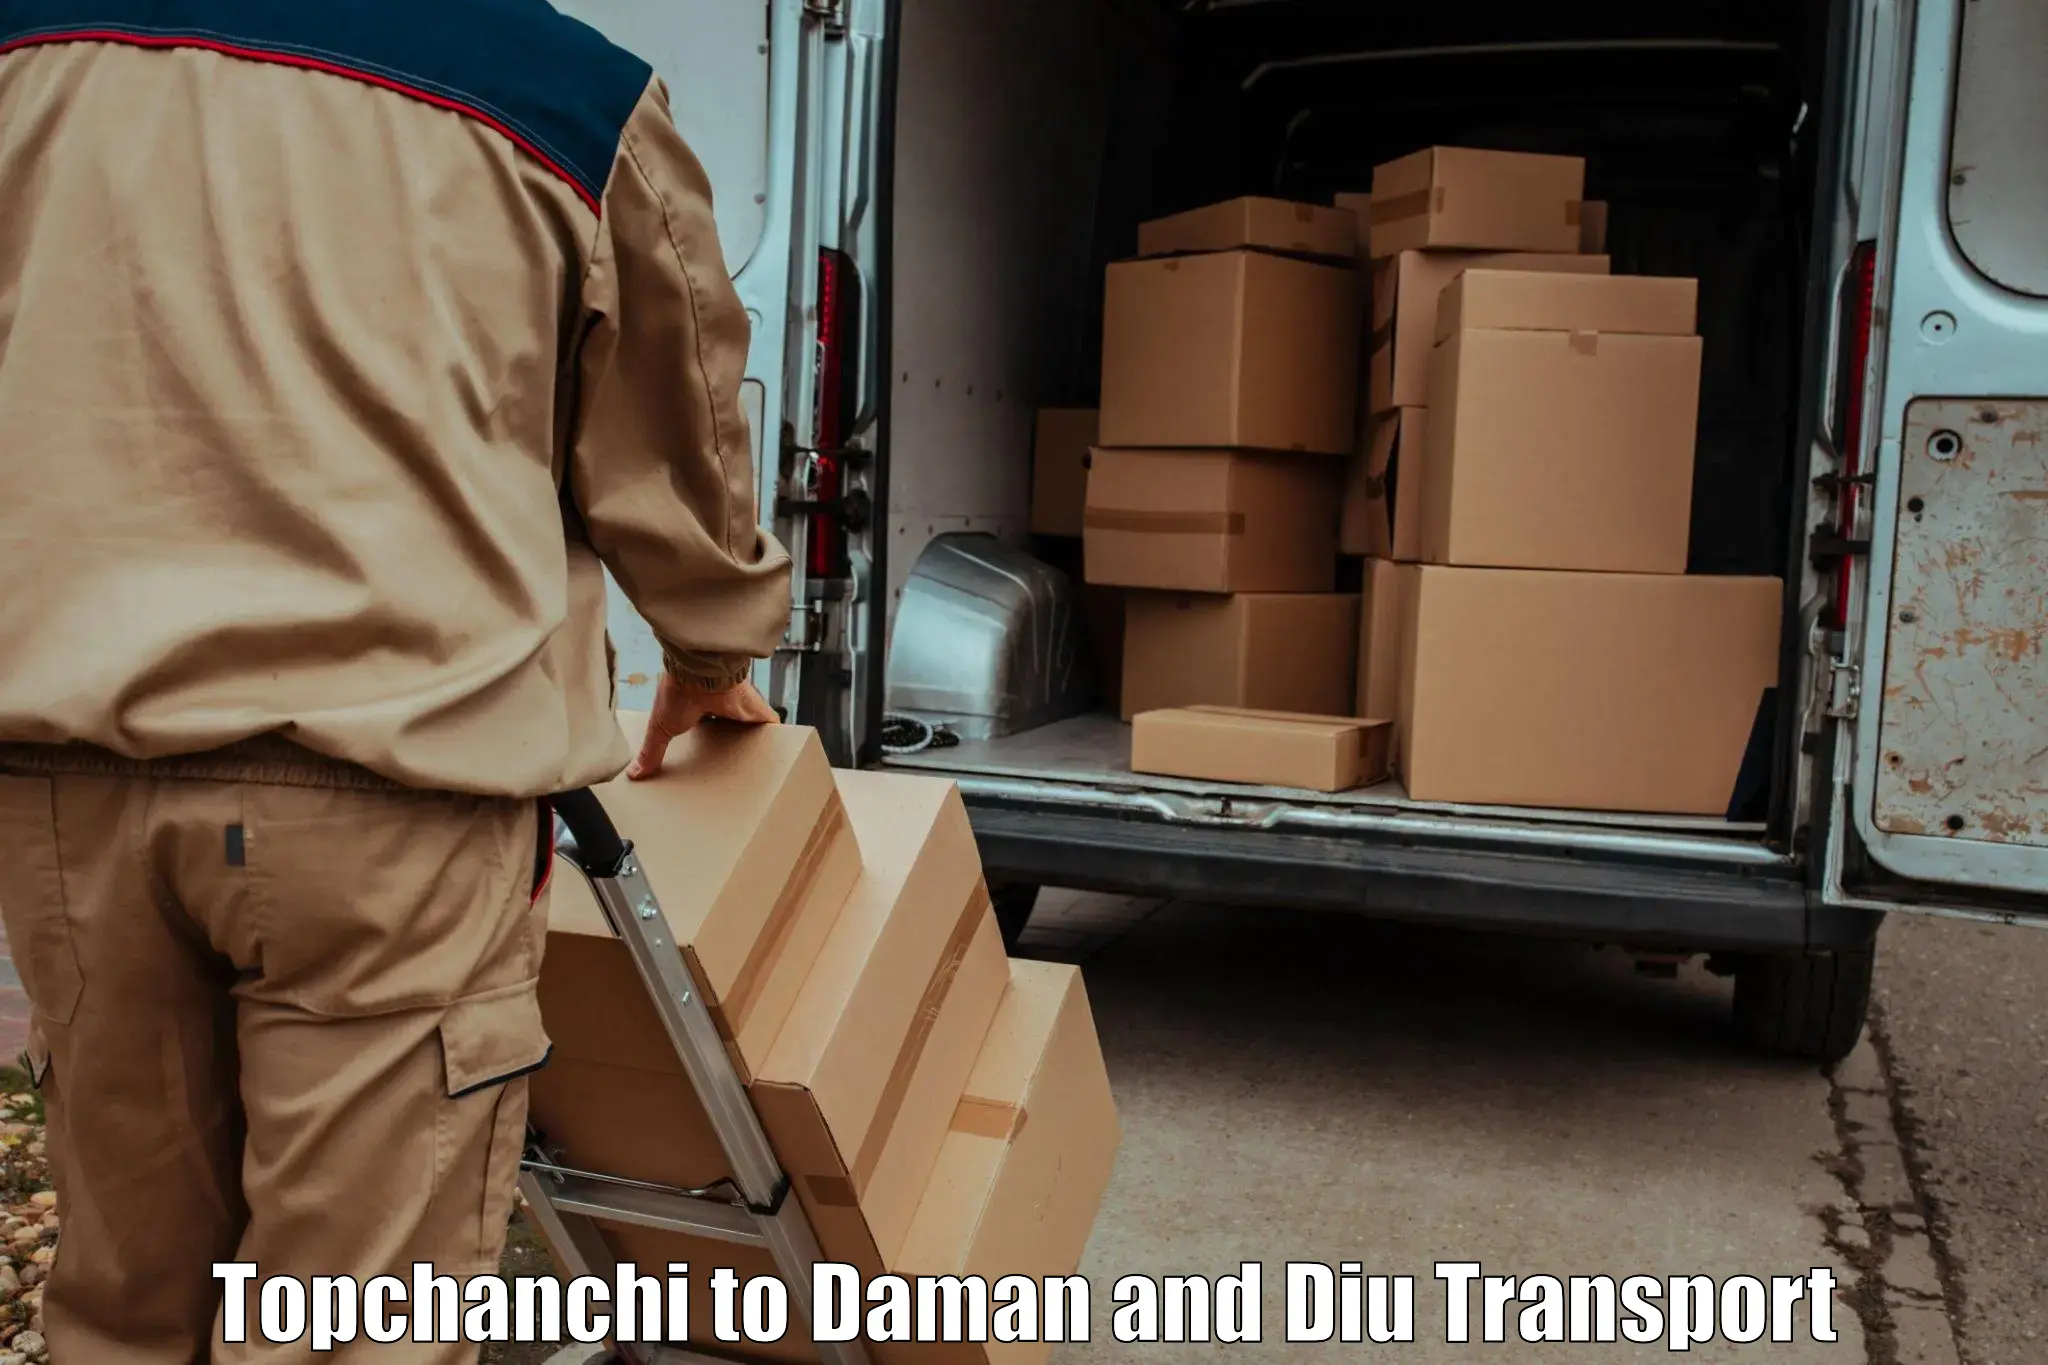 Nearest transport service Topchanchi to Diu